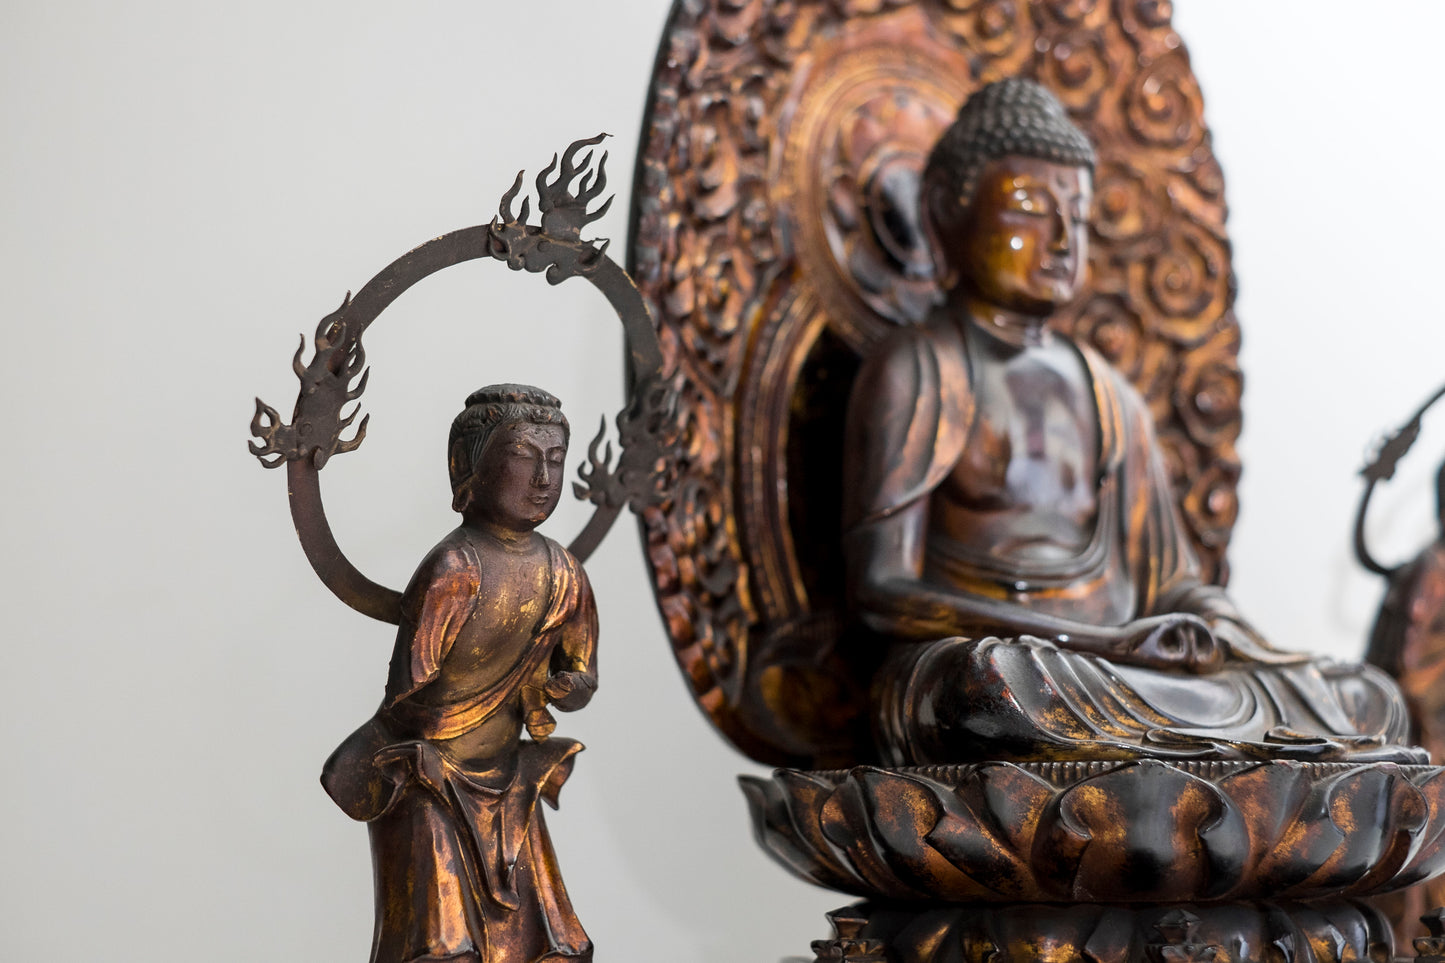 Fine Momoyama Edo Period Japanese Gilt Wood Antique Amida Nyorai Triad Buddha Buddhist Statue Sculpture Statue Set